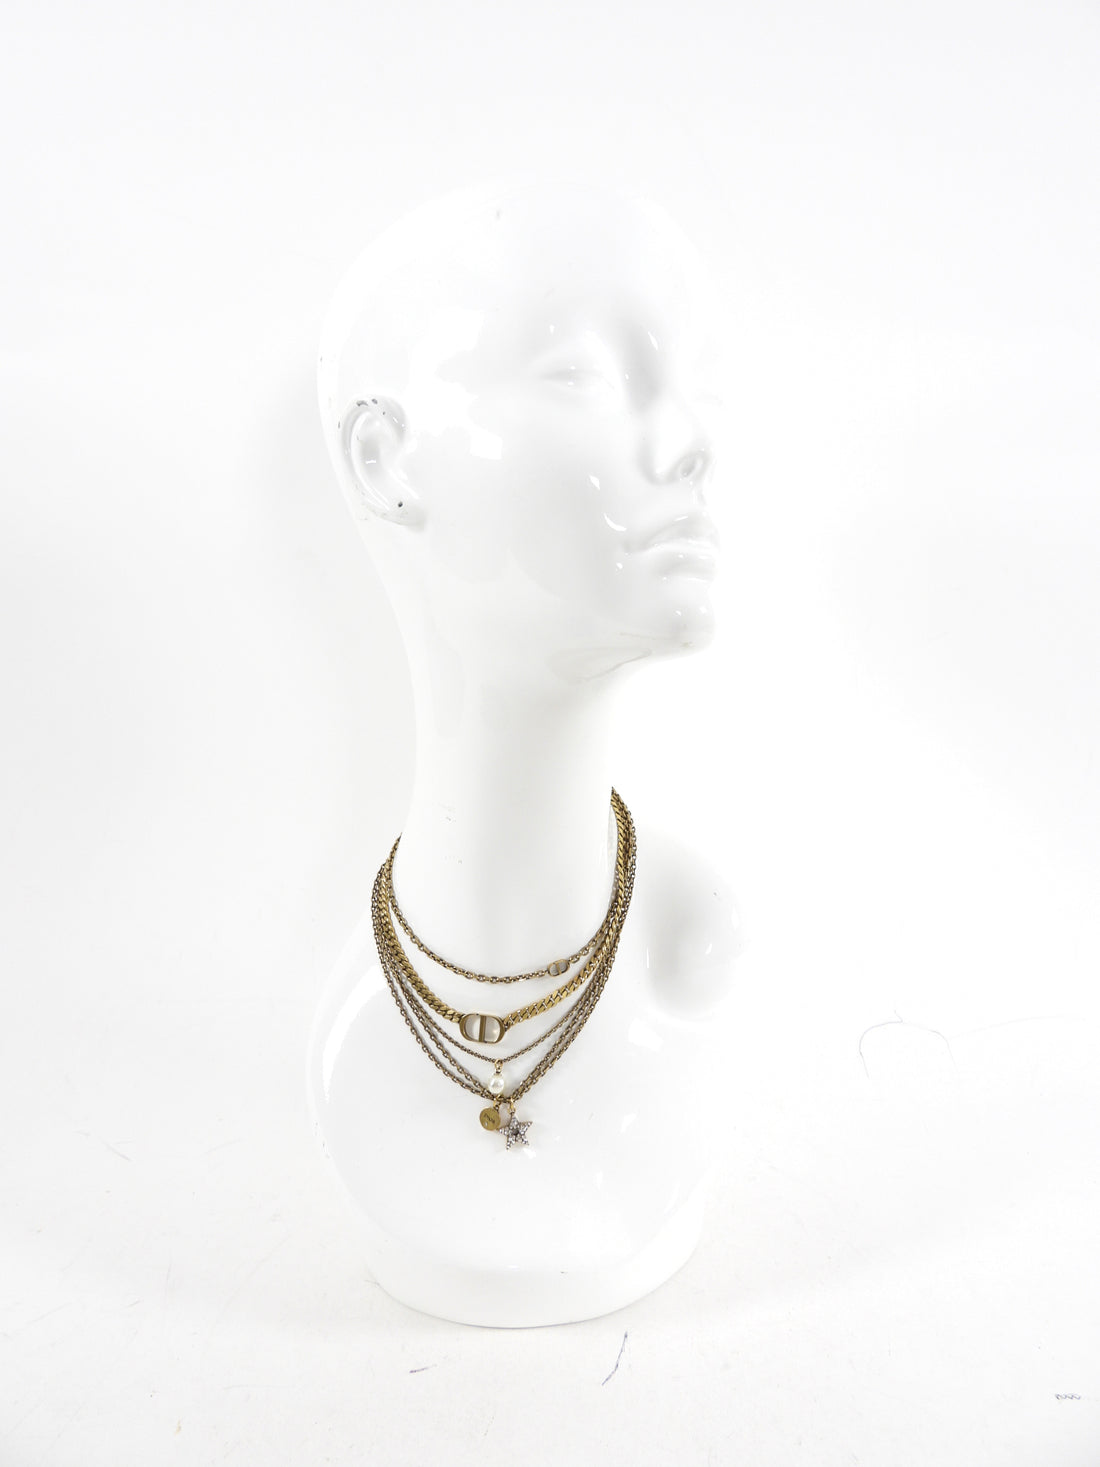 Christian Dior Brass Multi Chain CD Necklace